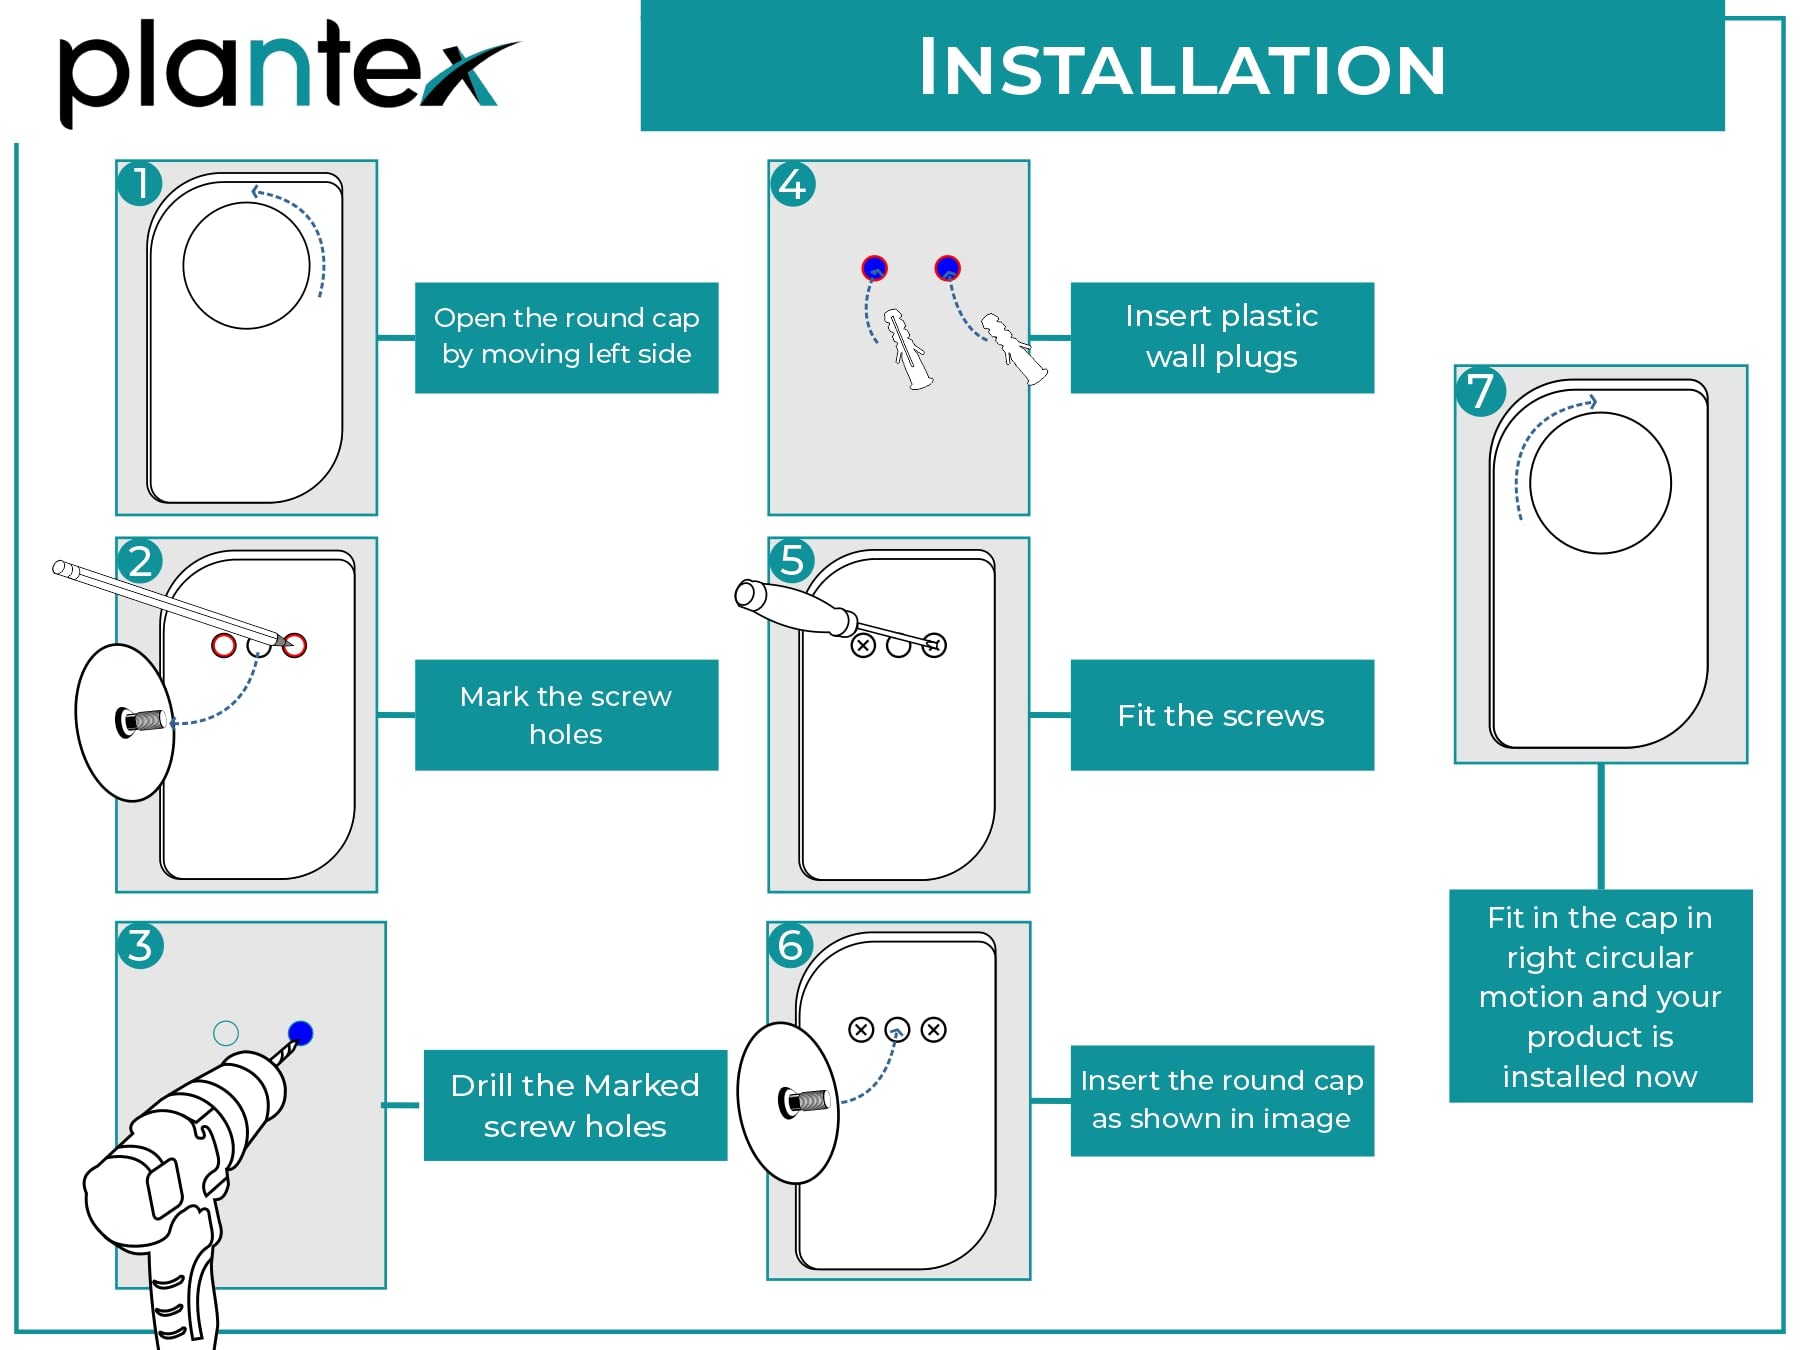 Plantex Dream High Grade Stainless Steel Tooth Brush Holder/Tumbler Holder/Bathroom Accessories (Chrome) - Pack of 4